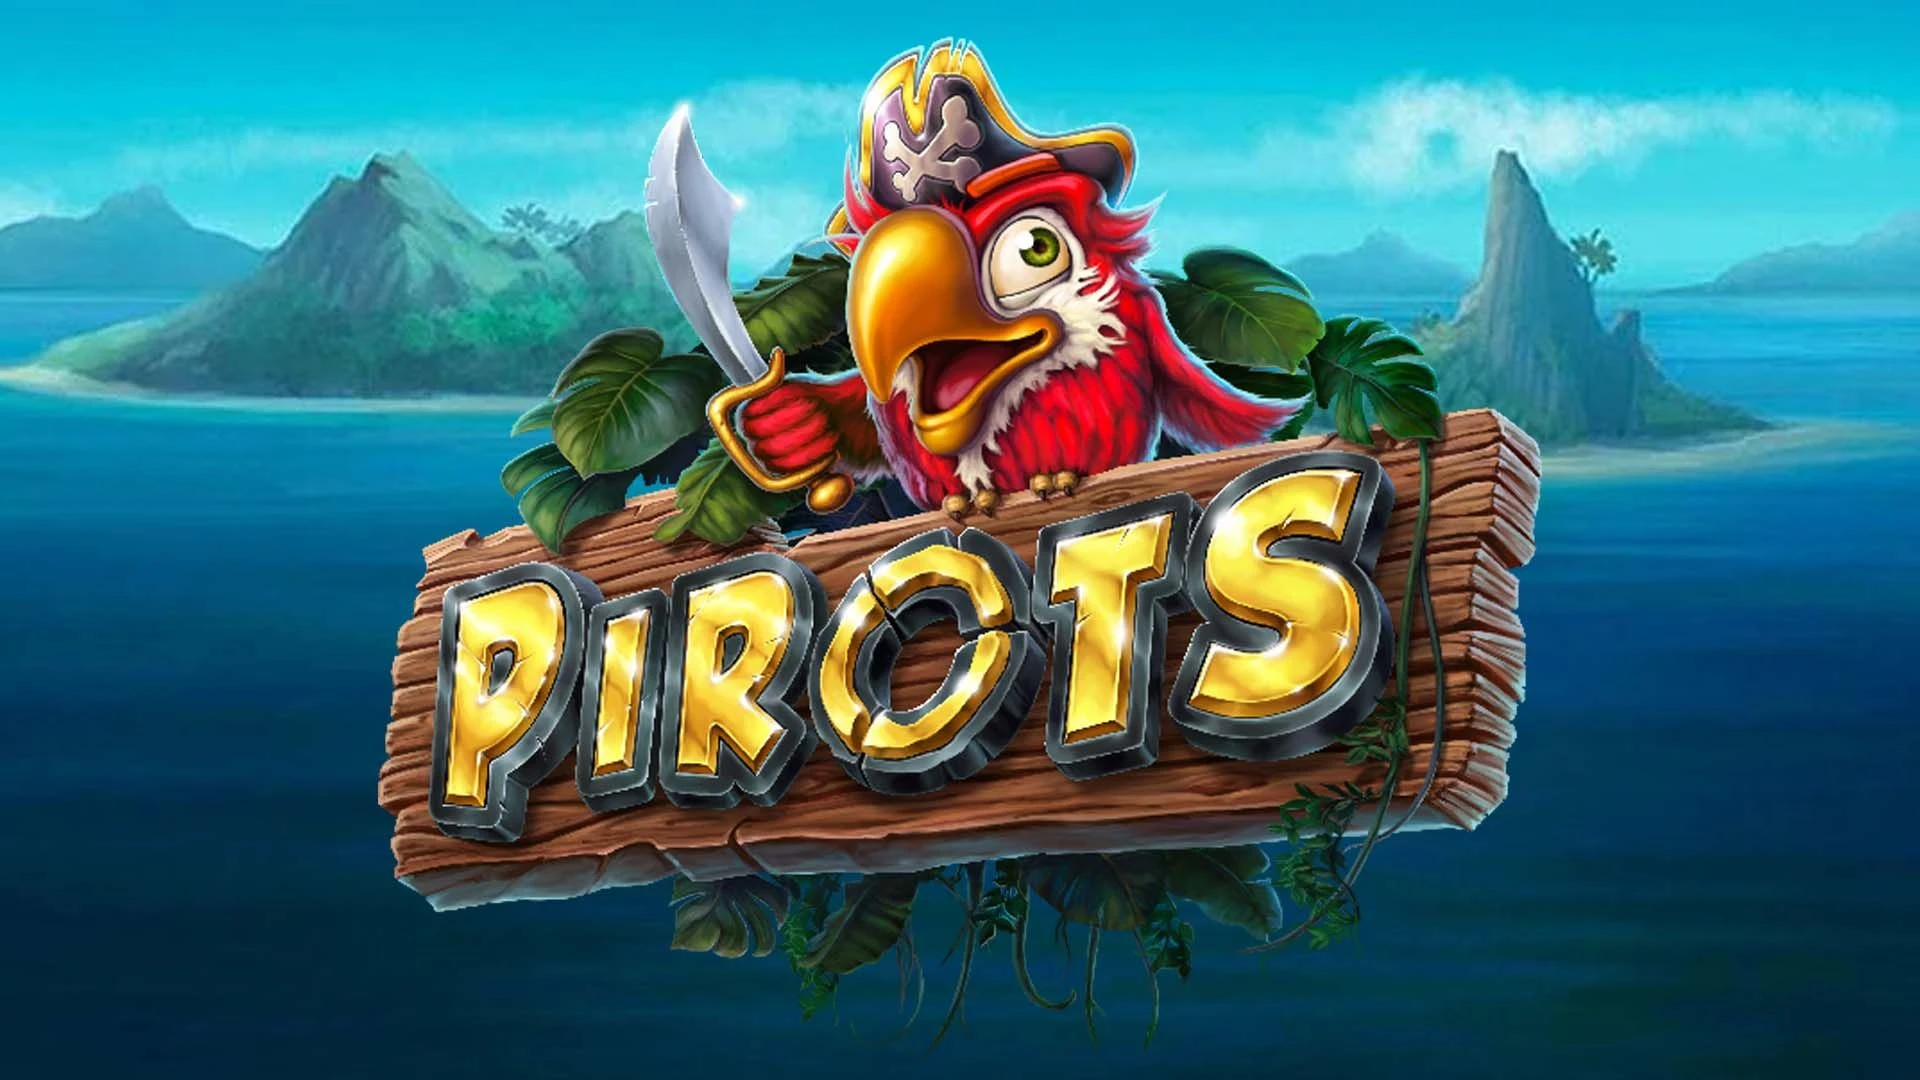 Pirots Image